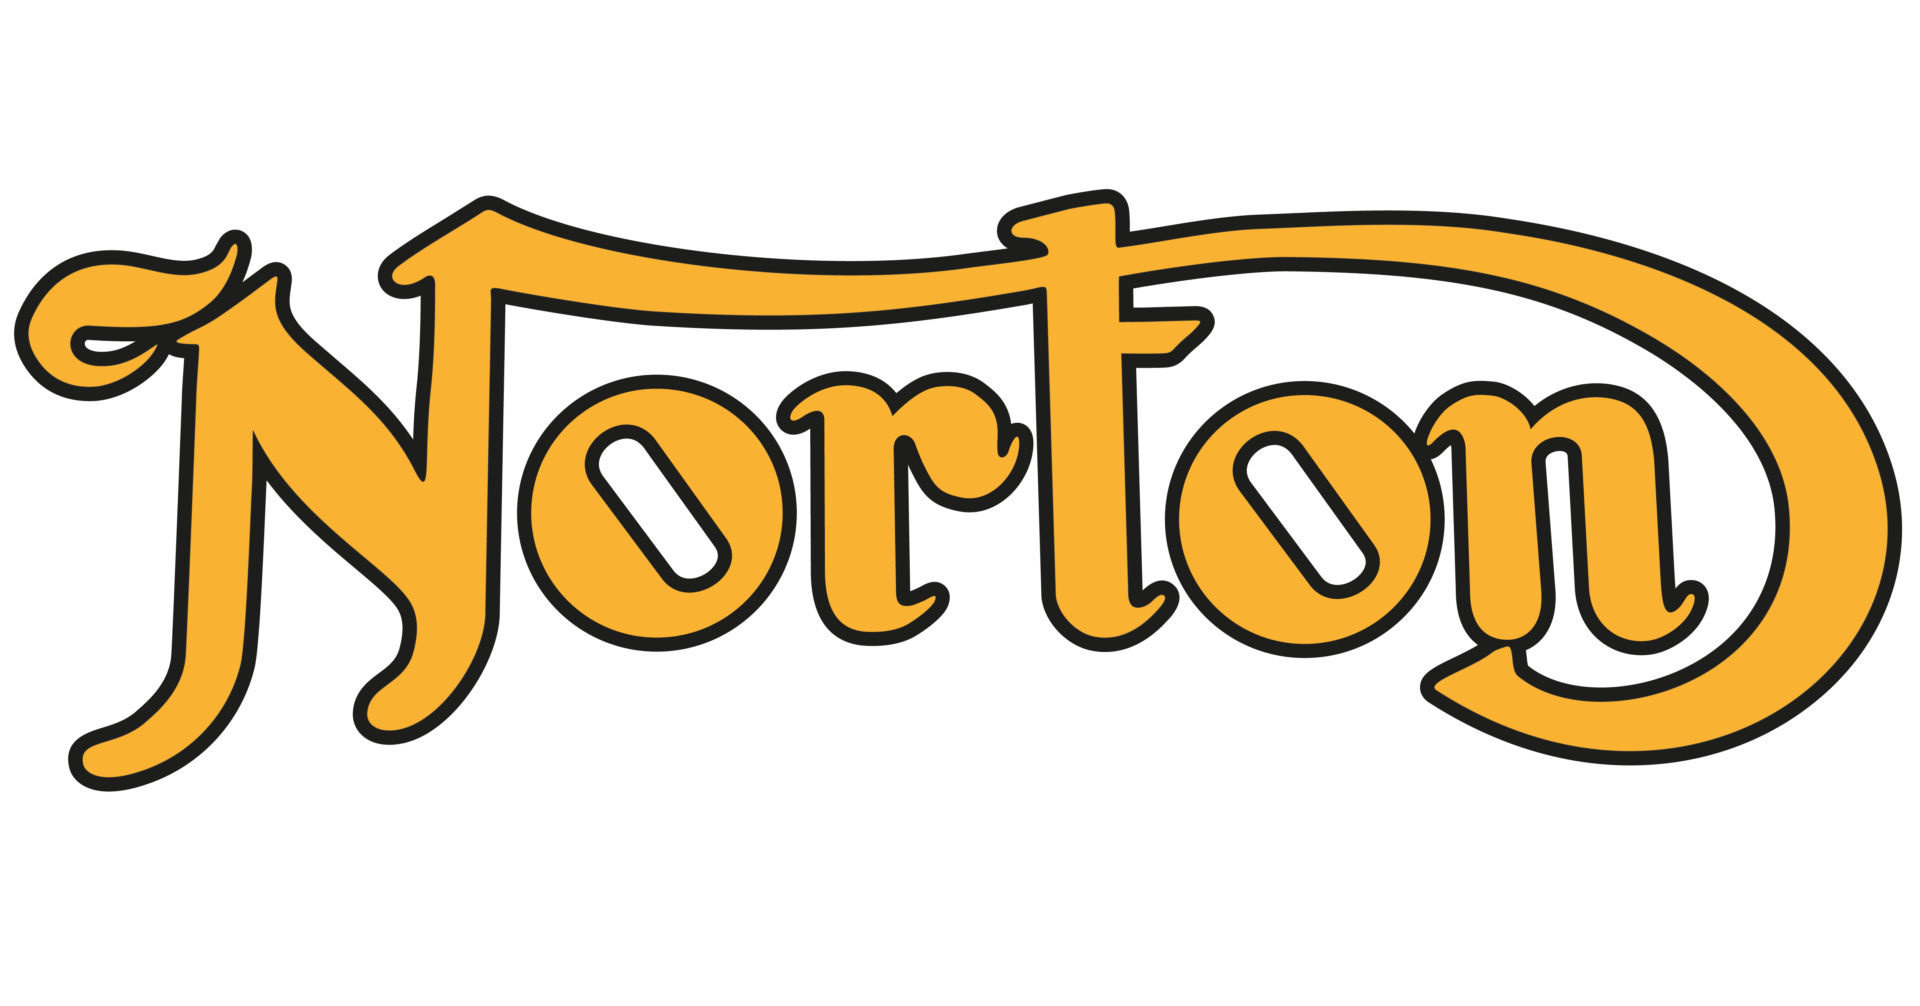 Norton logos